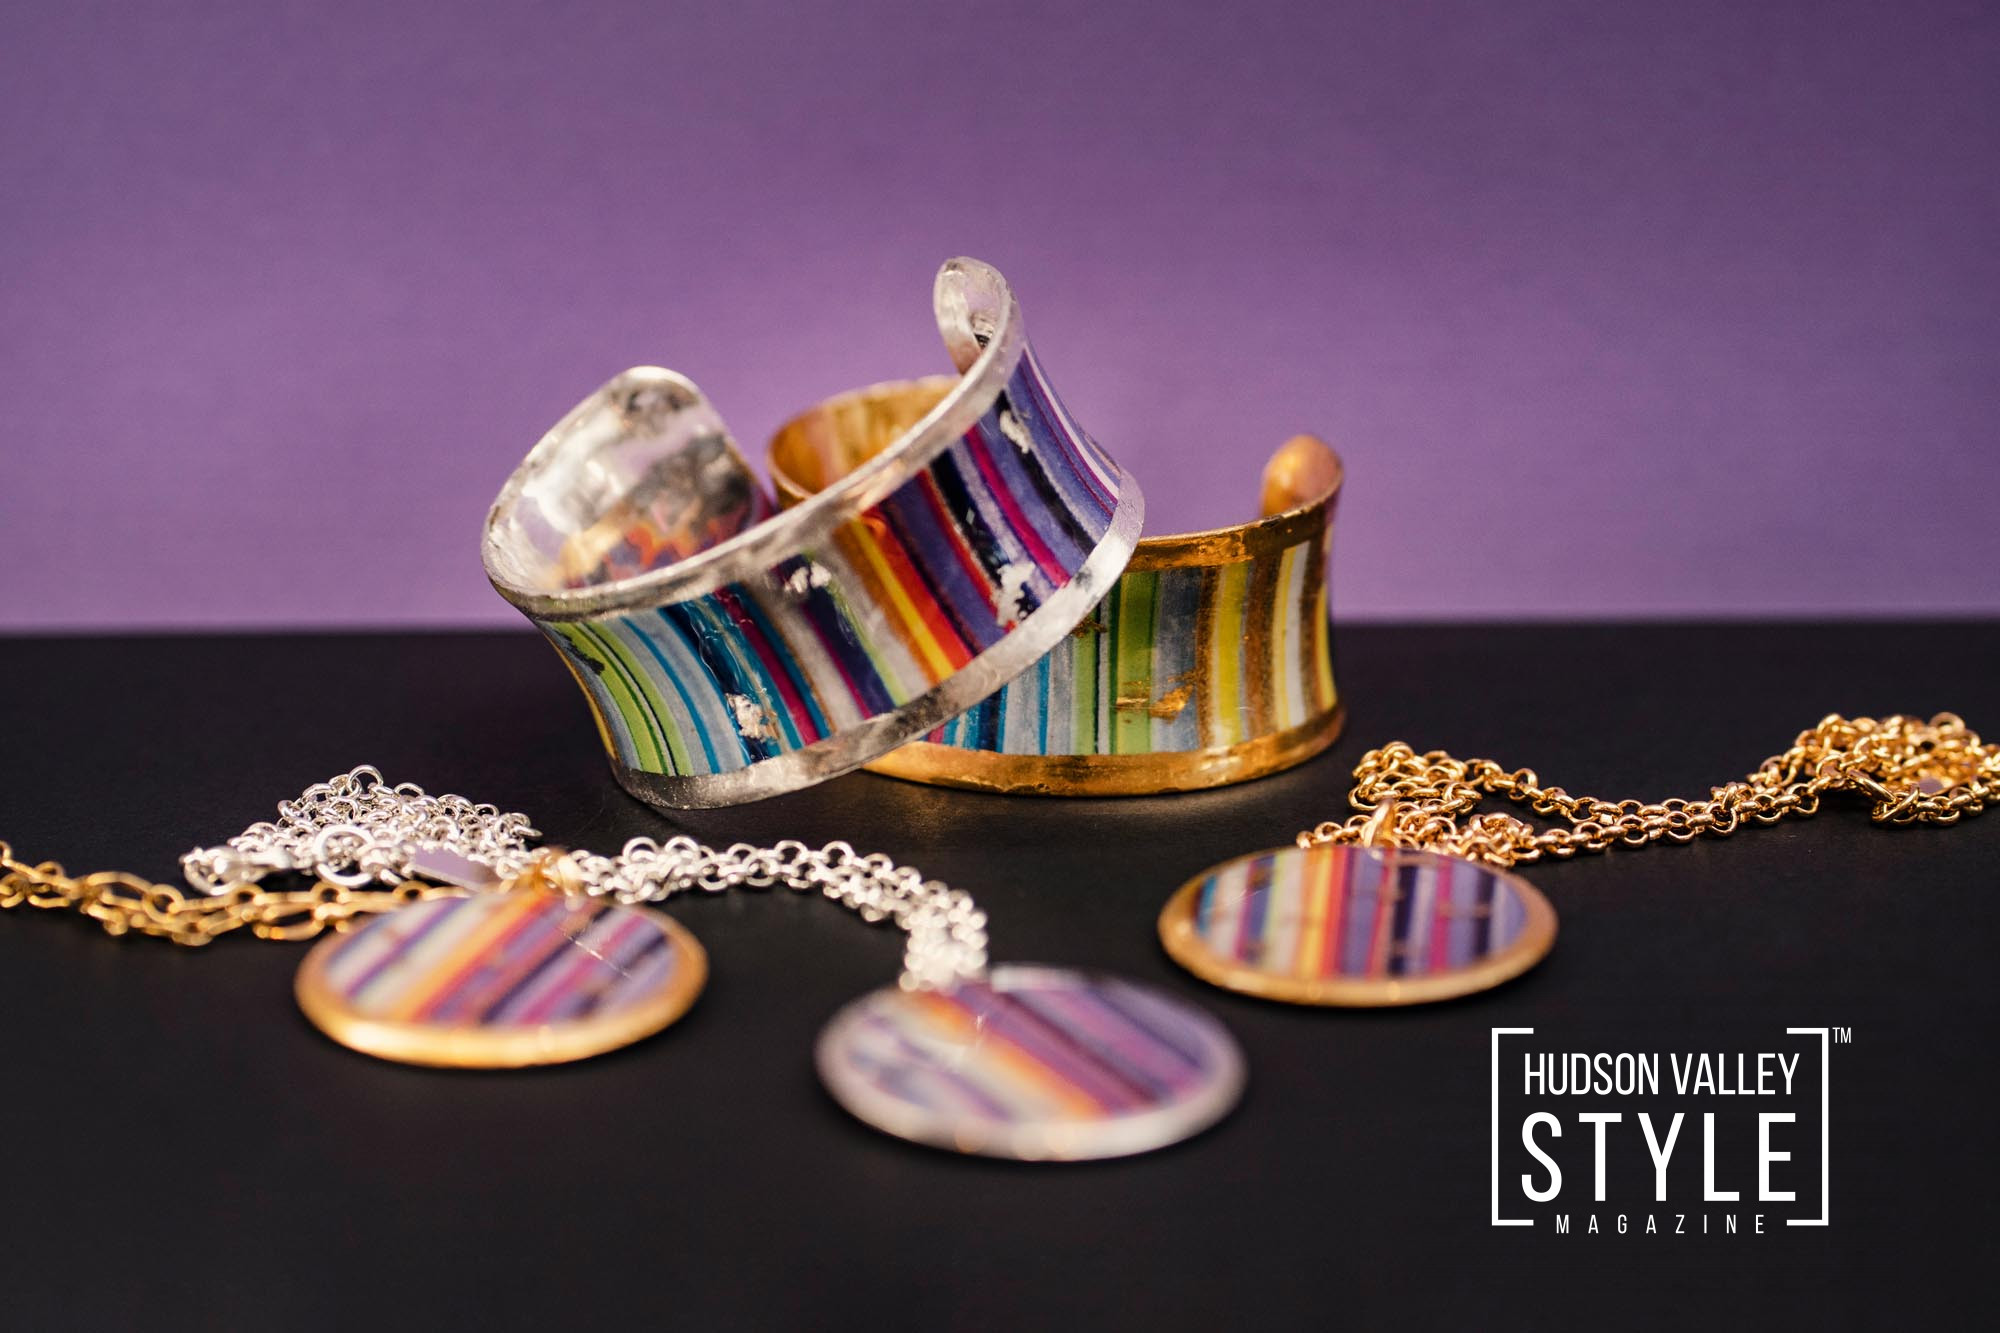 Friends in Fashion – a Creative Collaboration of Marla Beth Designs and Zaltas Gallery of Fine Jewelry